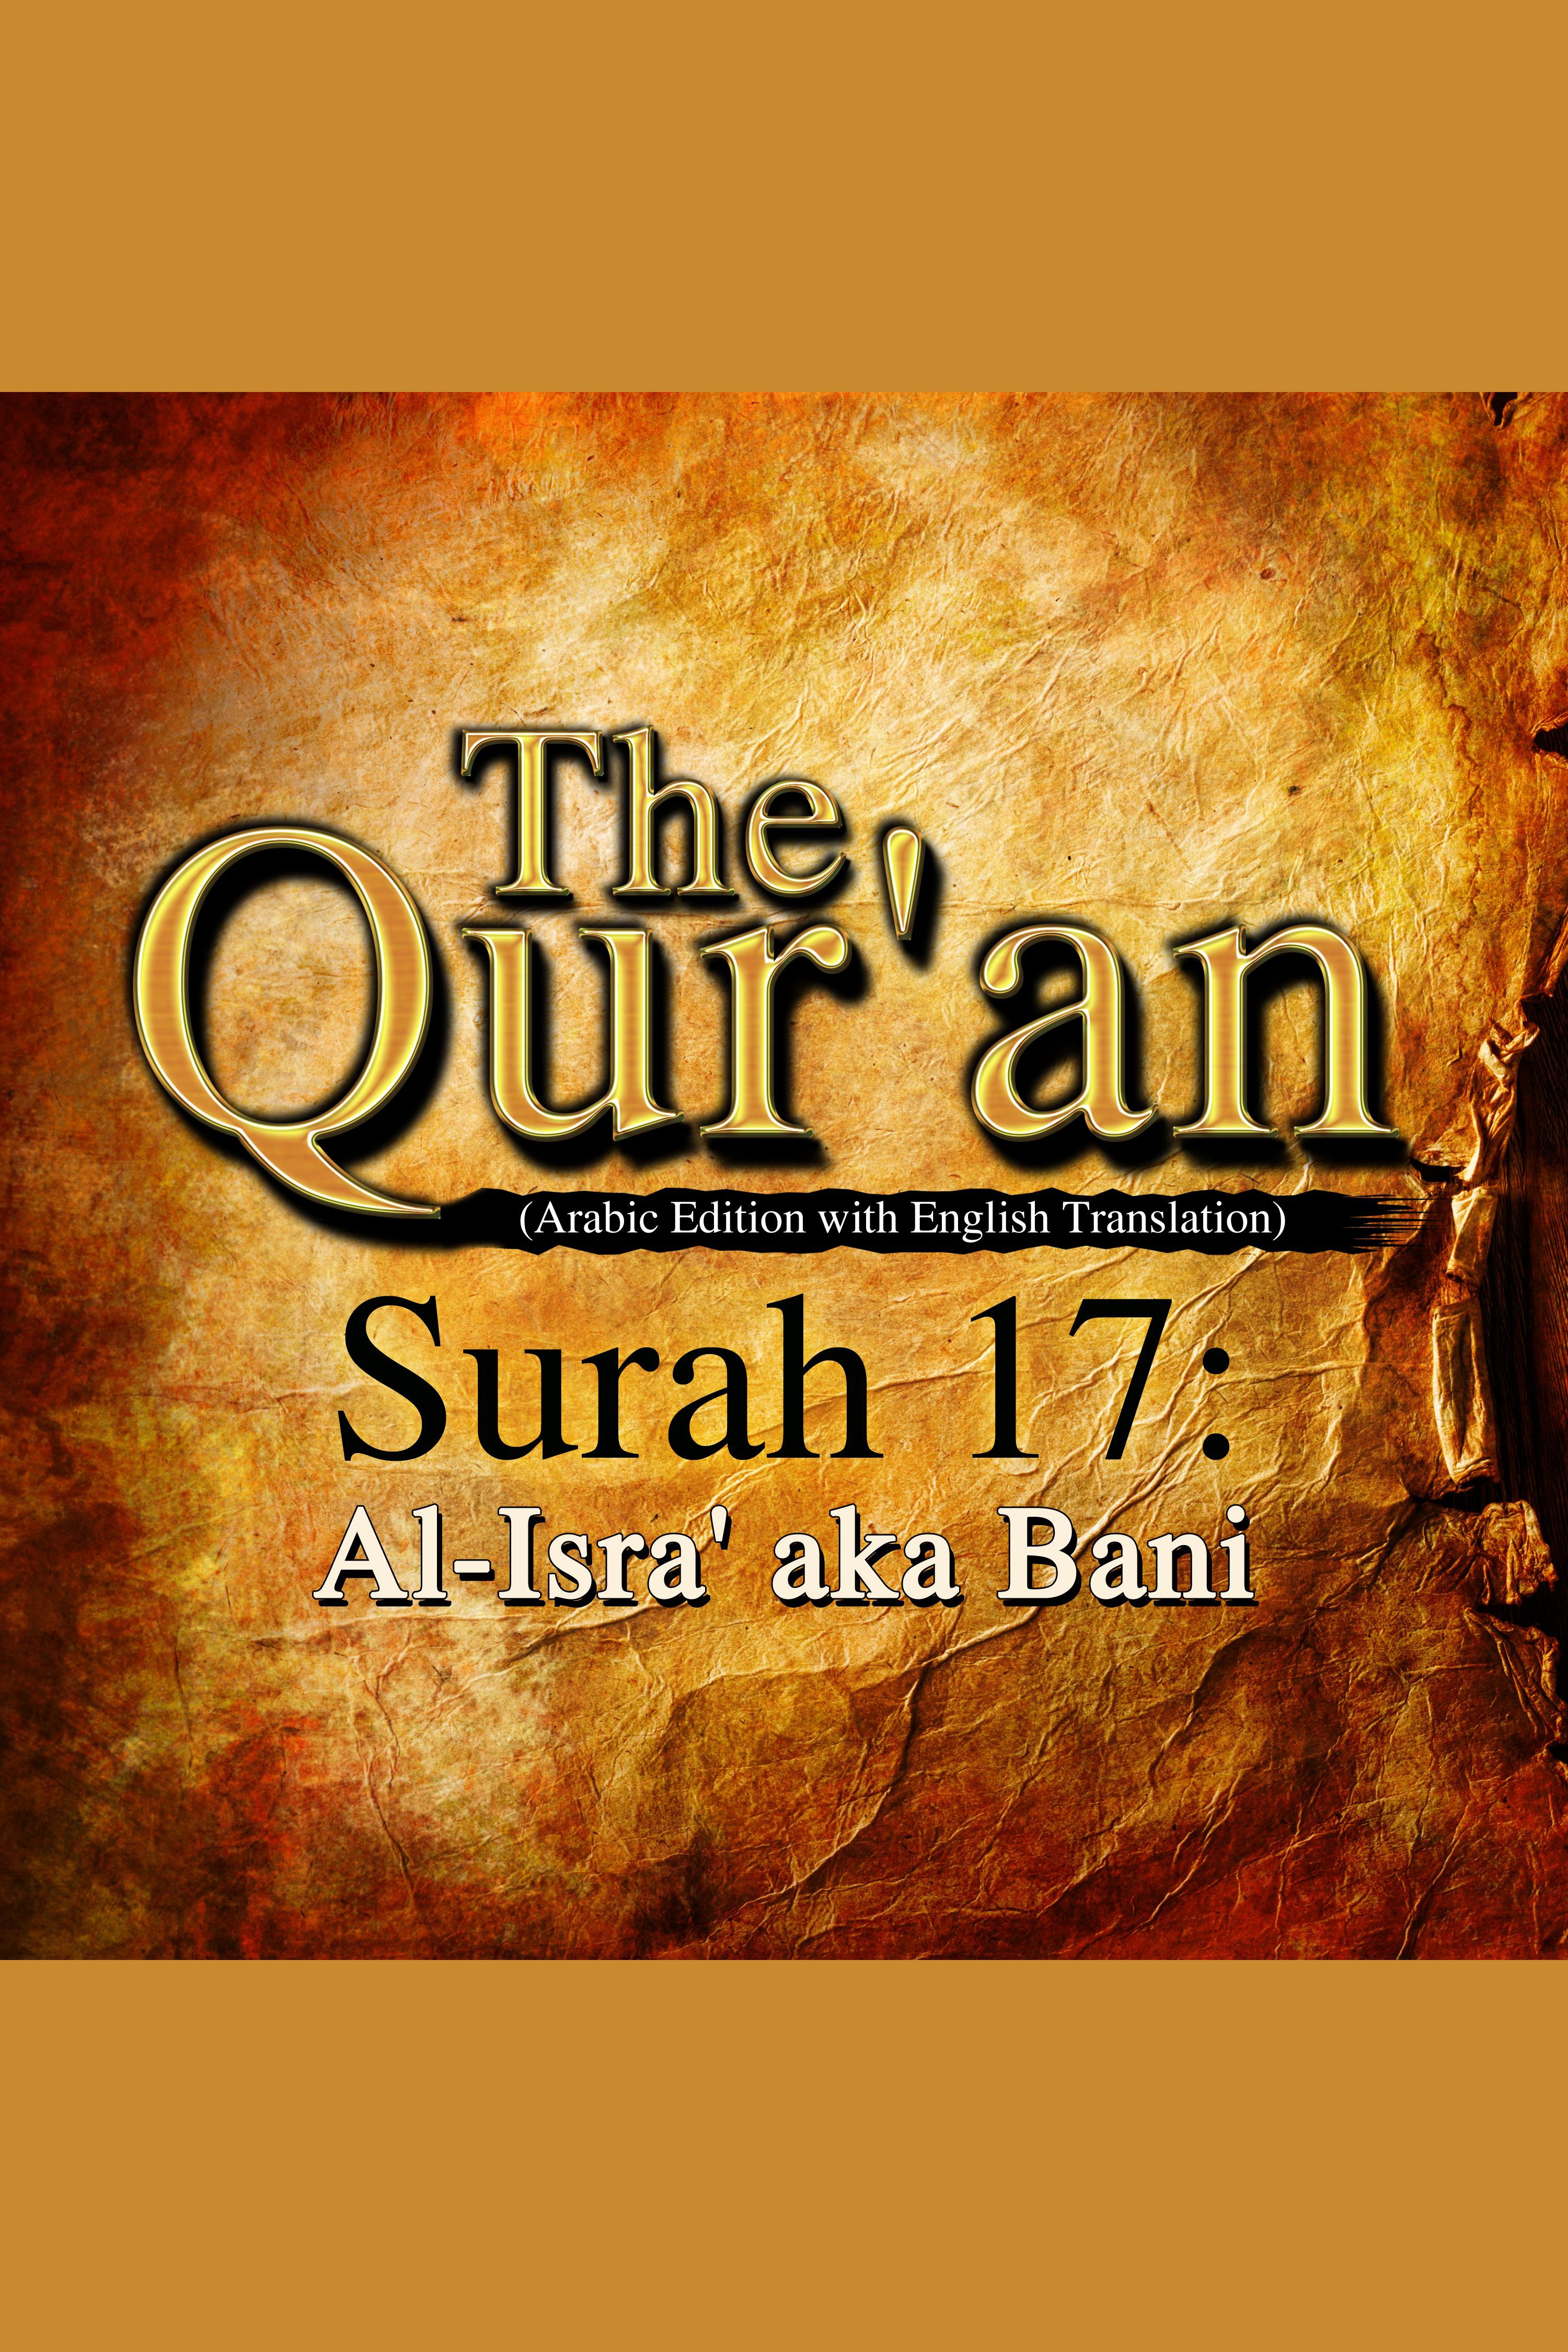 The Qur'an - Surah 17 - Al-Isra' aka Bani cover image